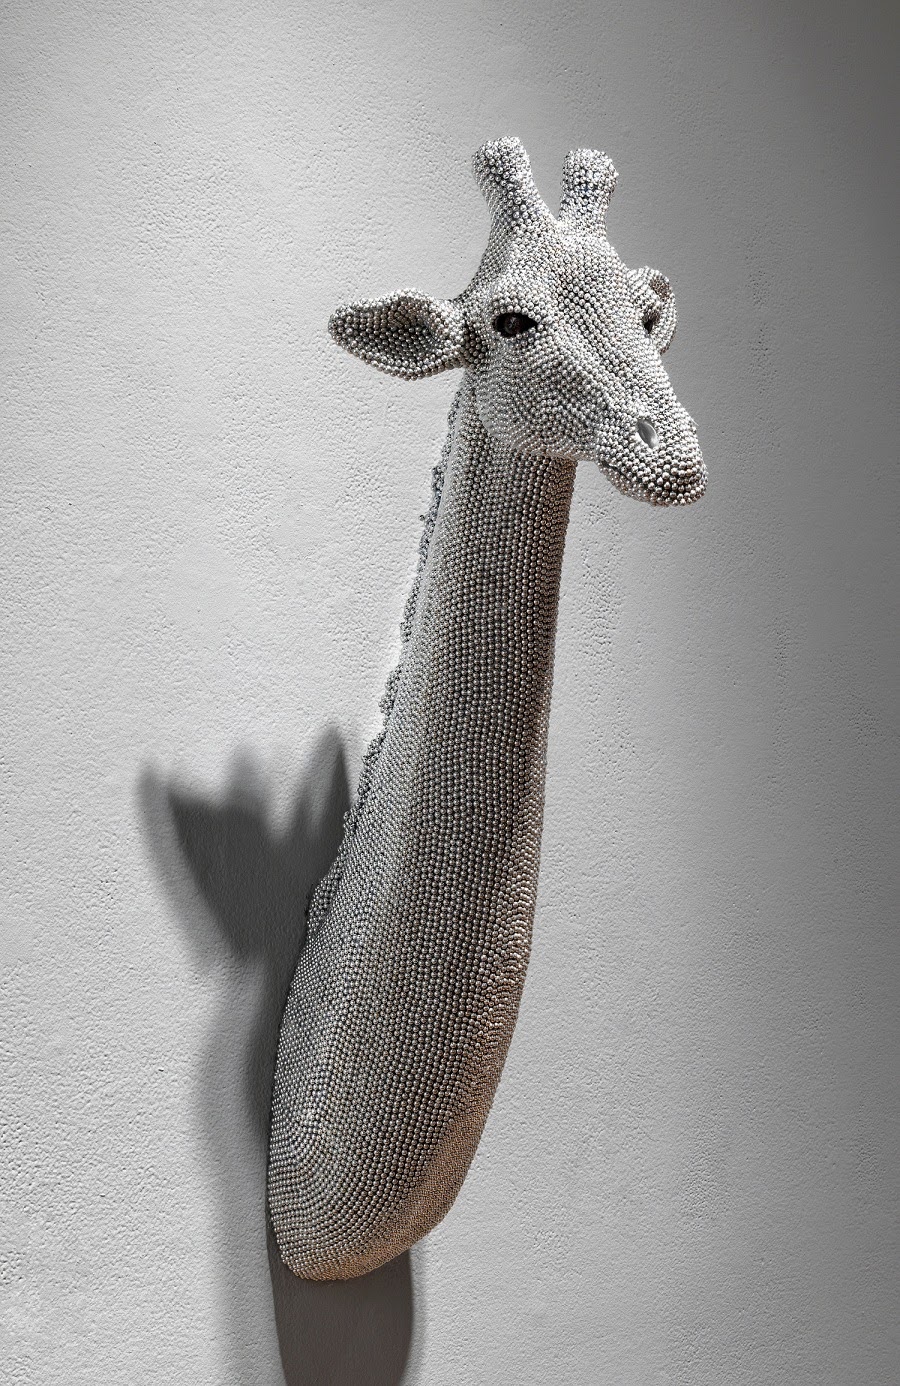 Urban Herd Amazing Animal Head Sculptures By Courtney Timmermans (1)